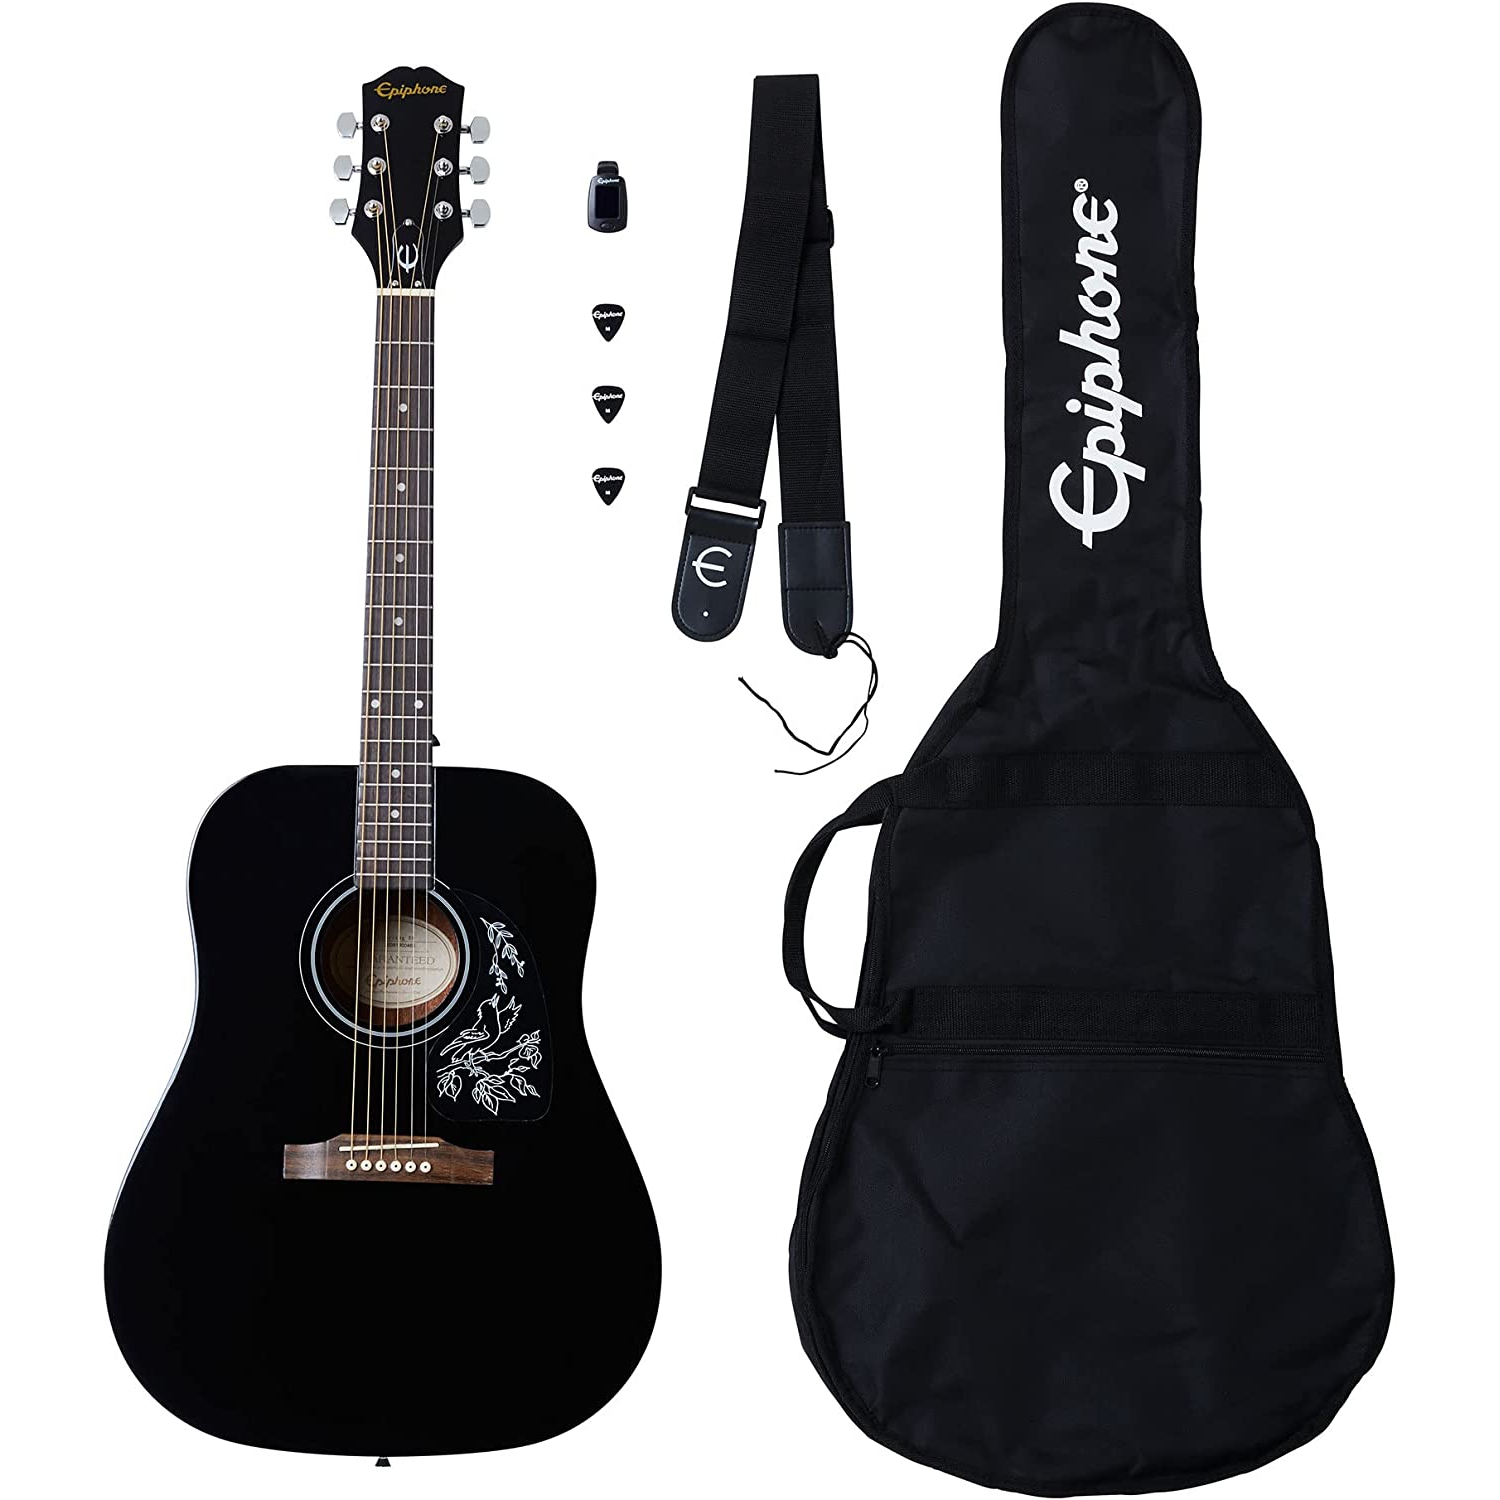 Epiphone Starling Akustik Gitar Başlangıç Paketi (Siyah)